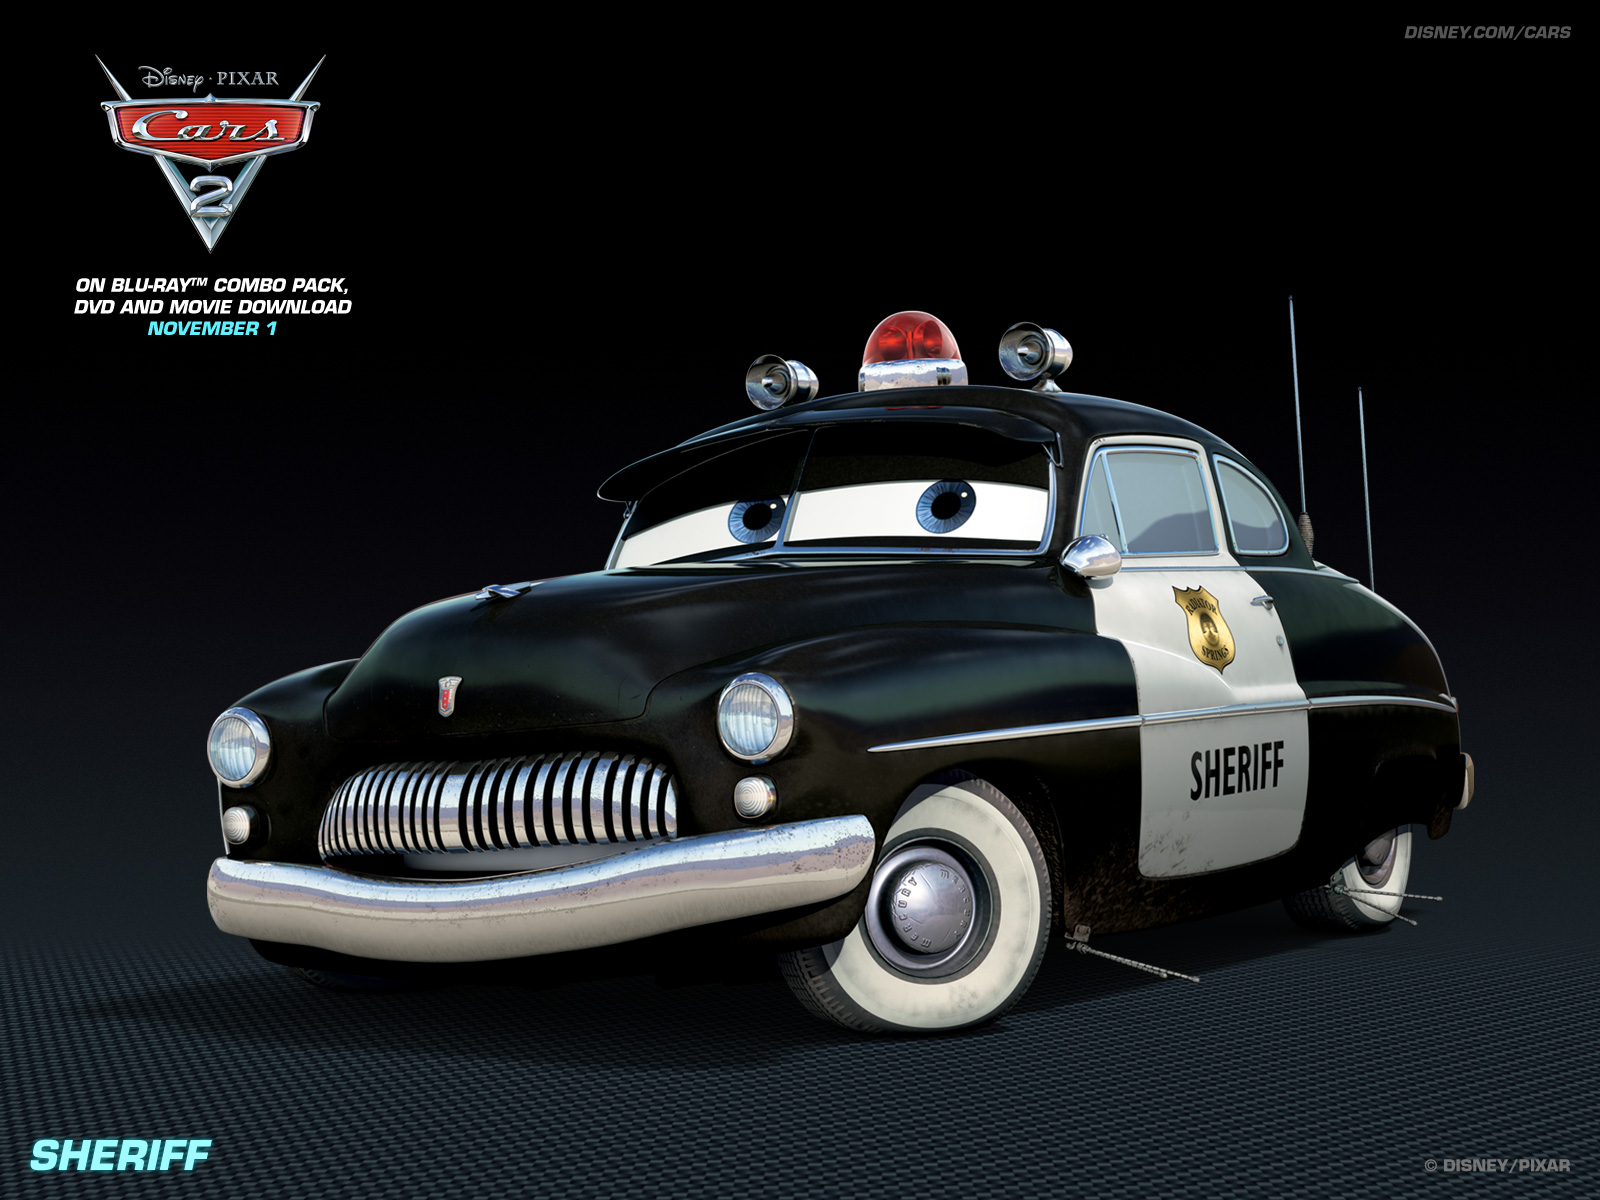 Sheriff - Disney Pixar Cars 2 Wallpaper (28400193) - Fanpop